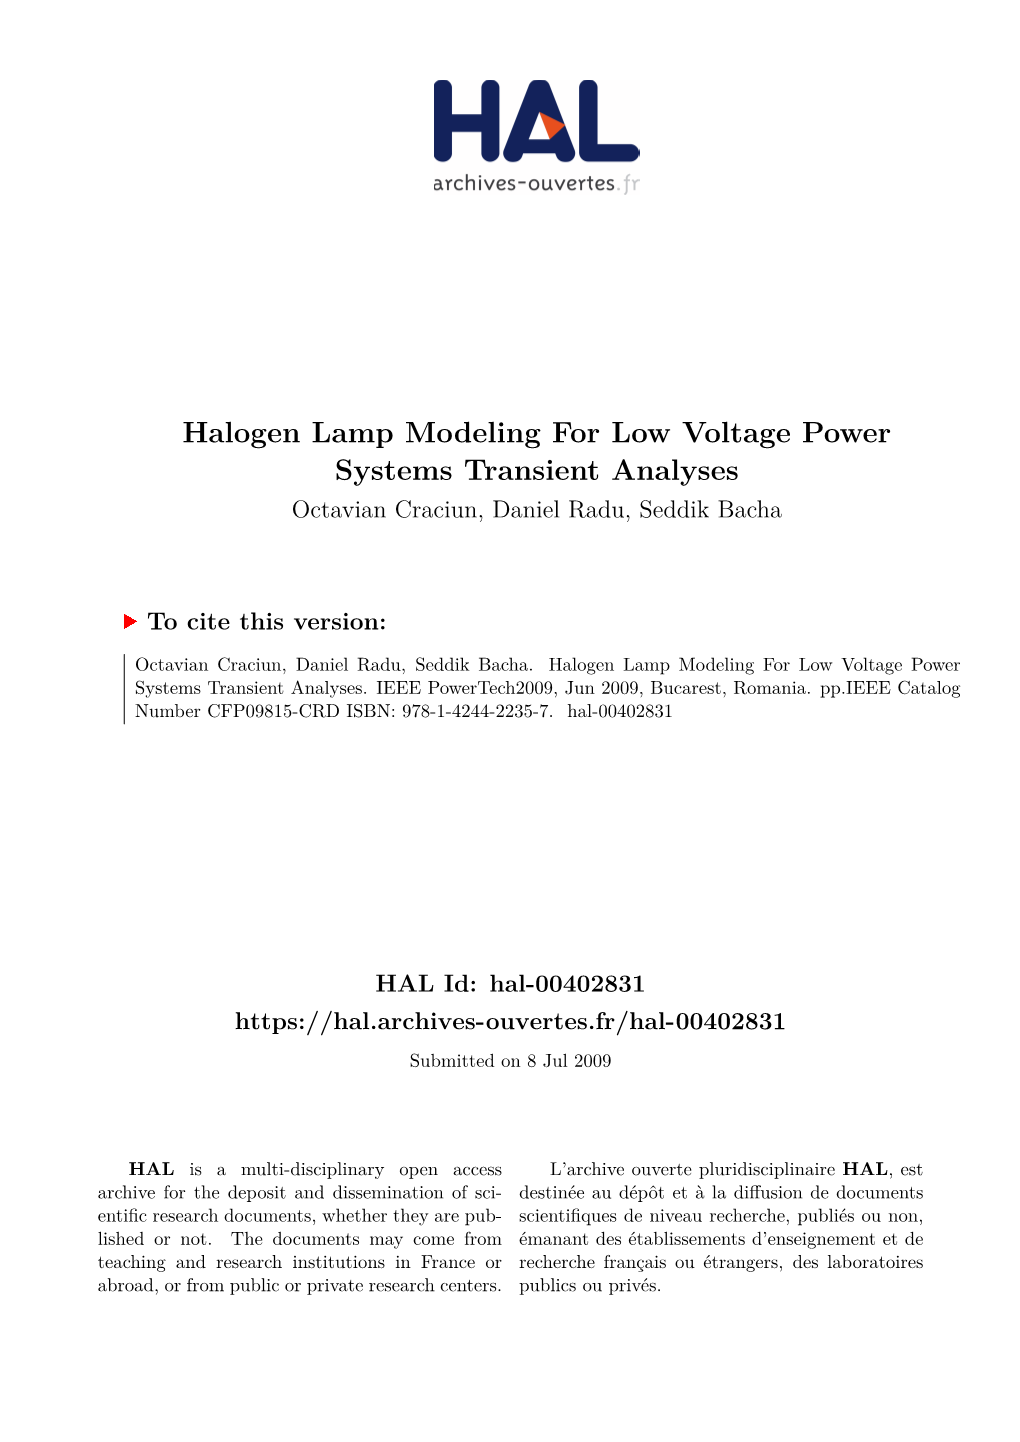 Halogen Lamp Modeling for Low Voltage Power Systems Transient Analyses Octavian Craciun, Daniel Radu, Seddik Bacha